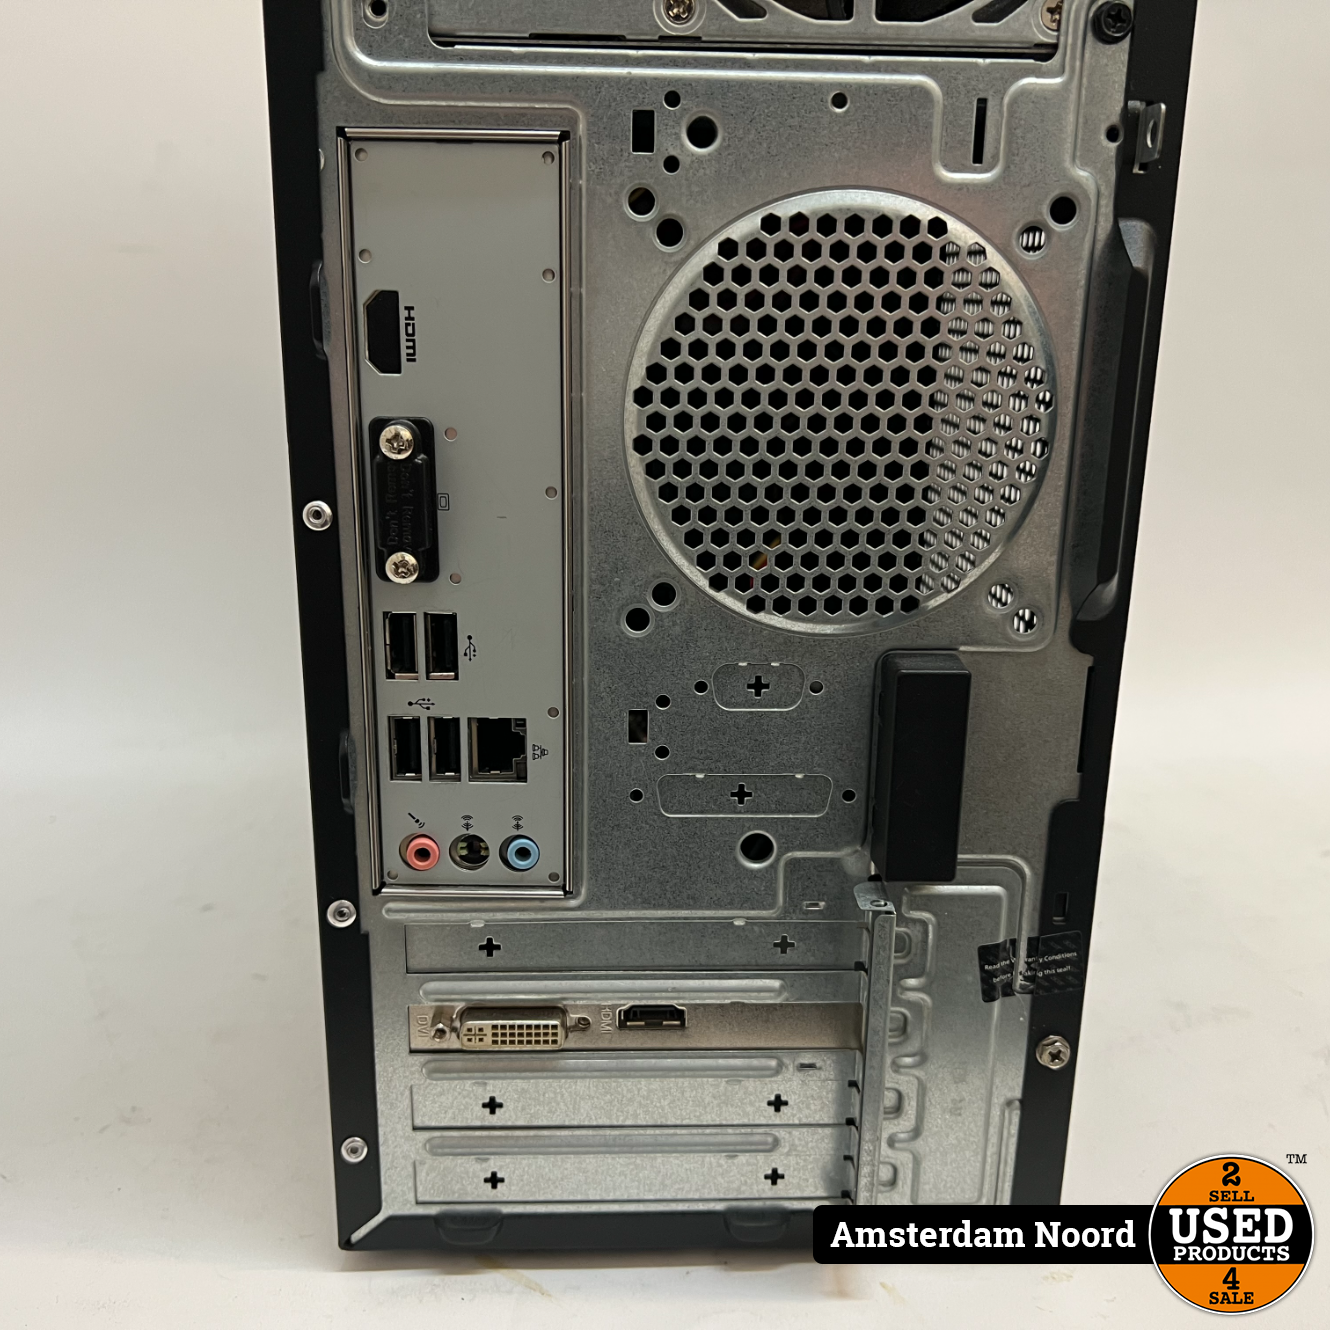 Ongemak muis of rat bleek Acer Aspire TC-705 Desktop PC - i5-4460/8GB/1TB/GTX745/W10 - Used Products  Amsterdam Noord